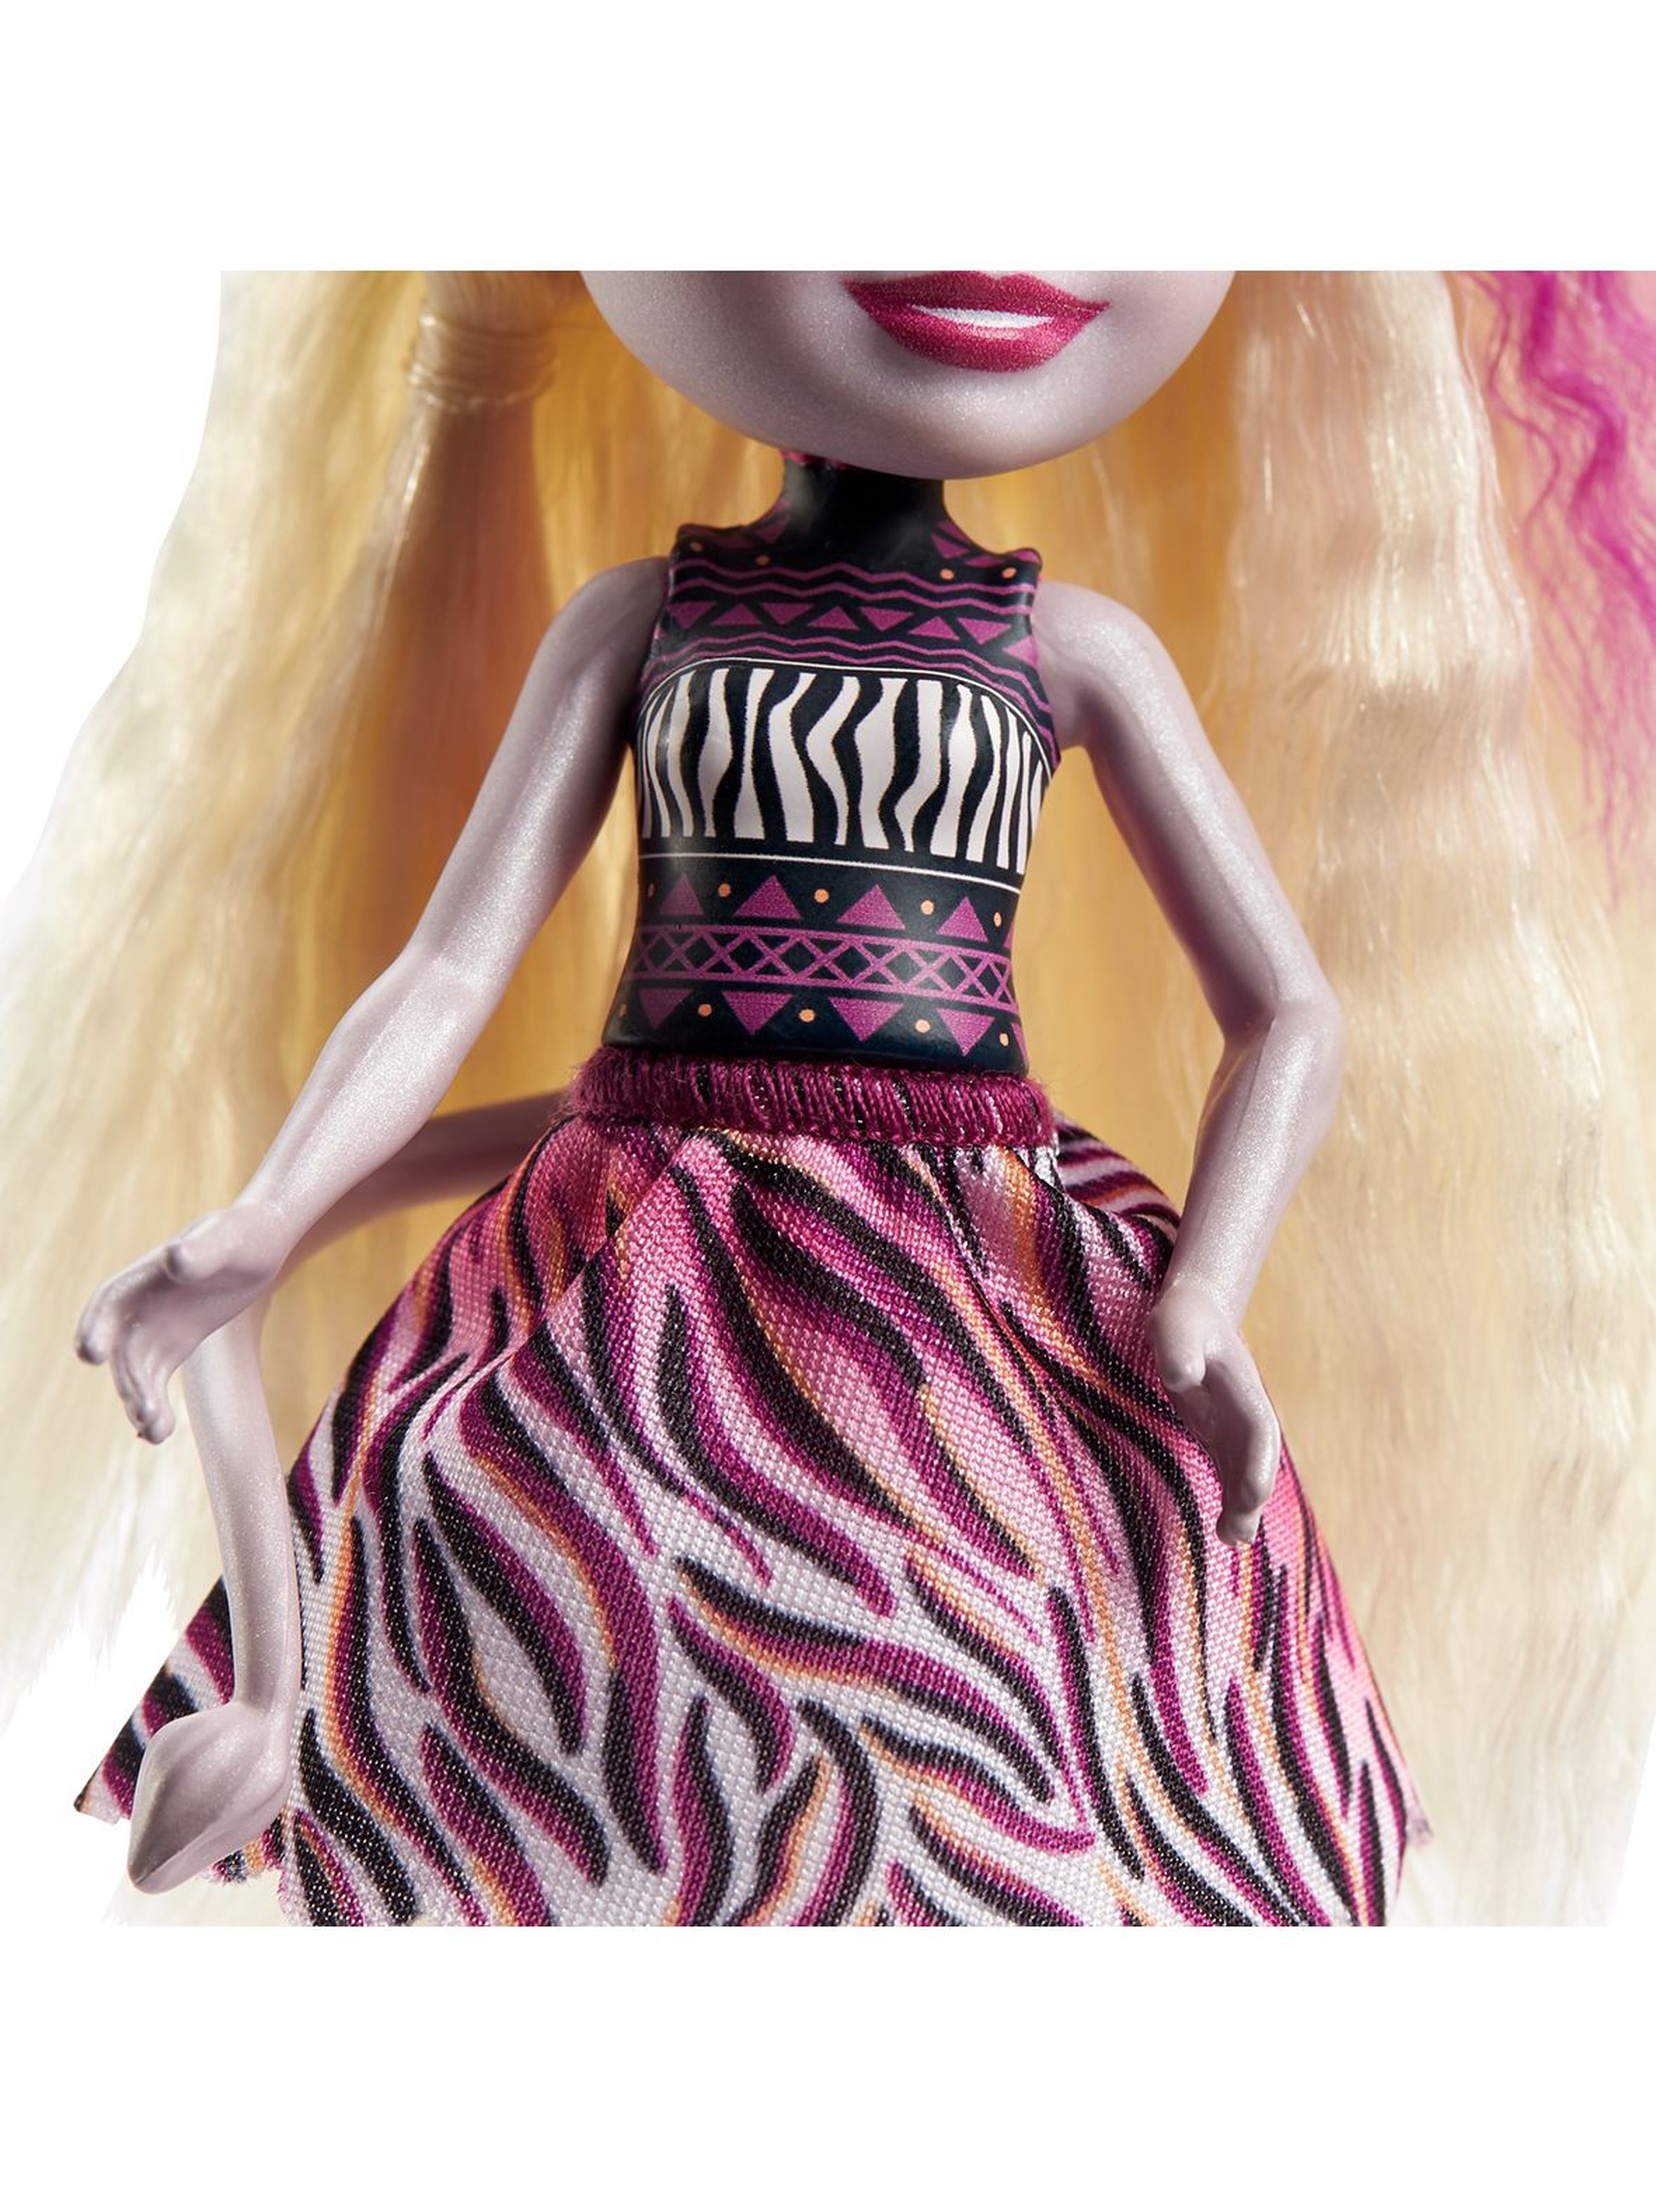 Enchantimals Zadie Zebra Lalka Zebra + figurka wiek 4+